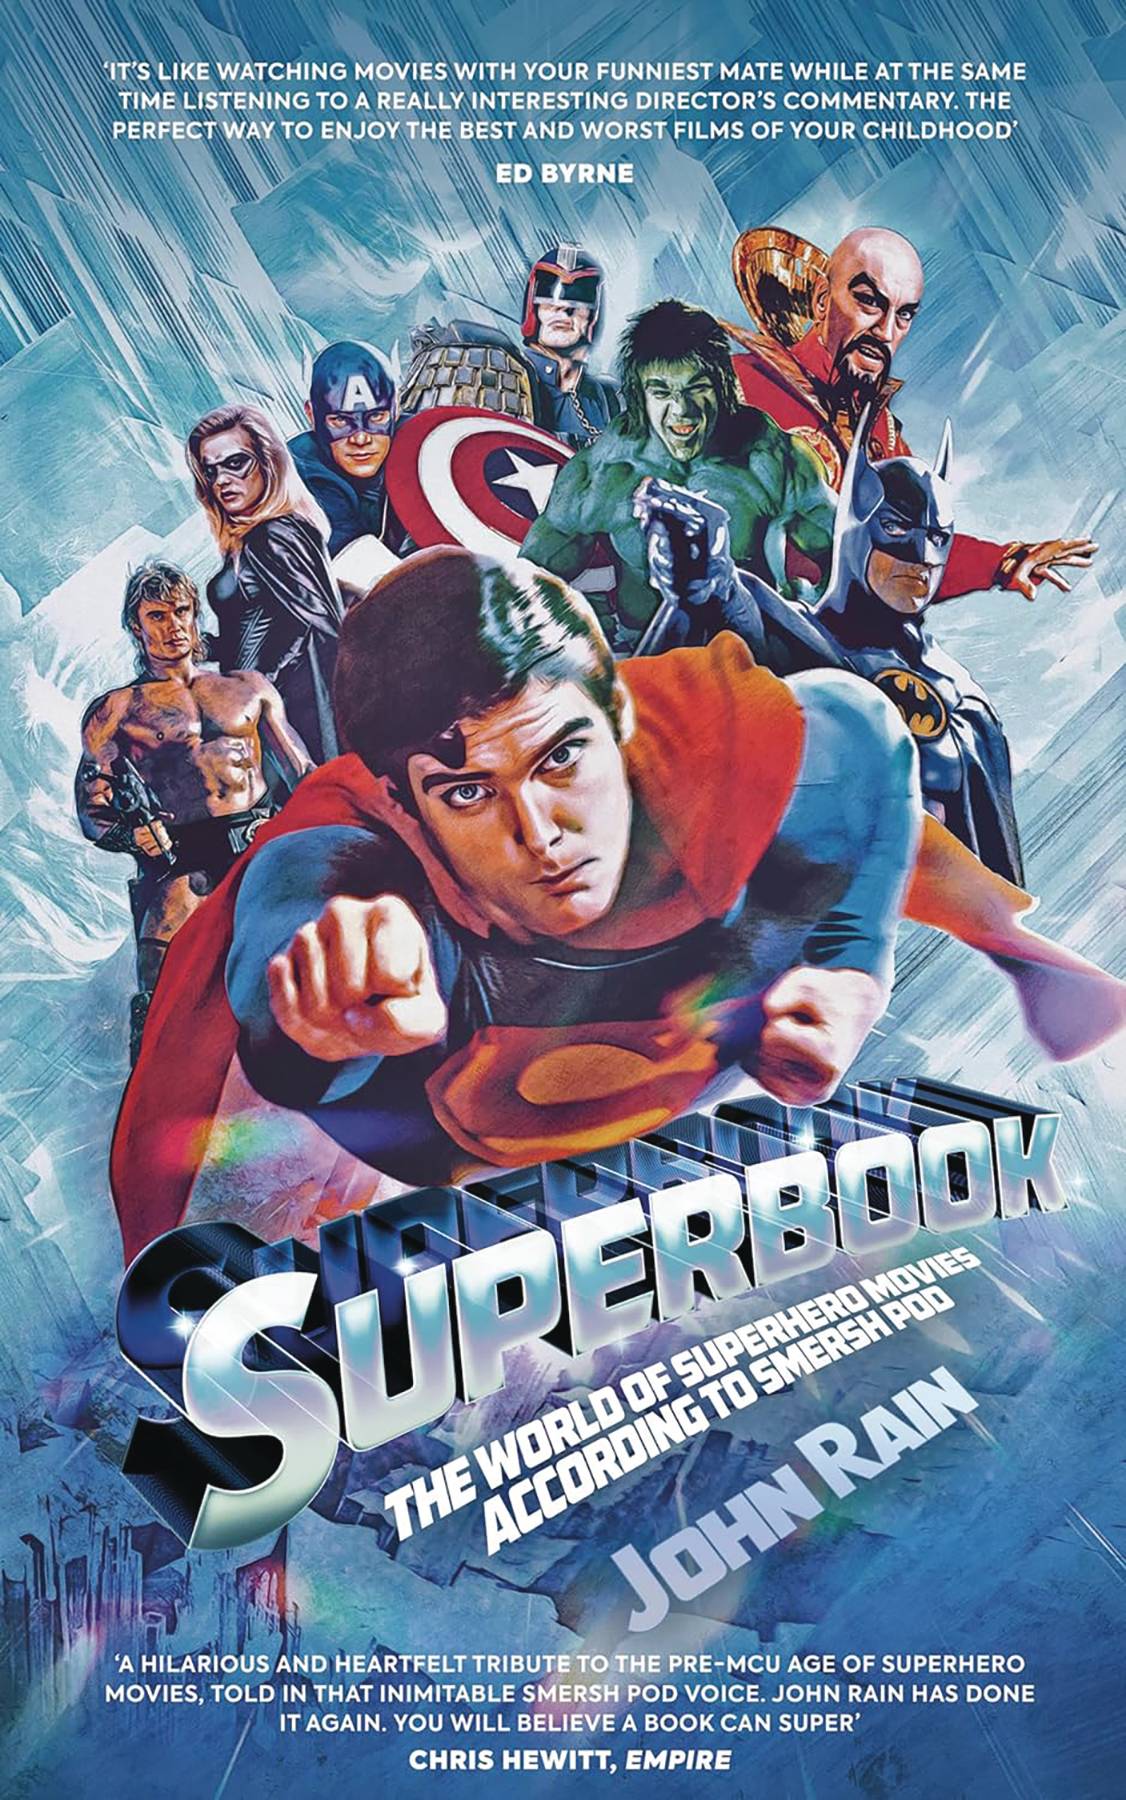 SUPERBOOK WORLD SUPERHERO MOVIES ACCORDING TO SMERSH POD